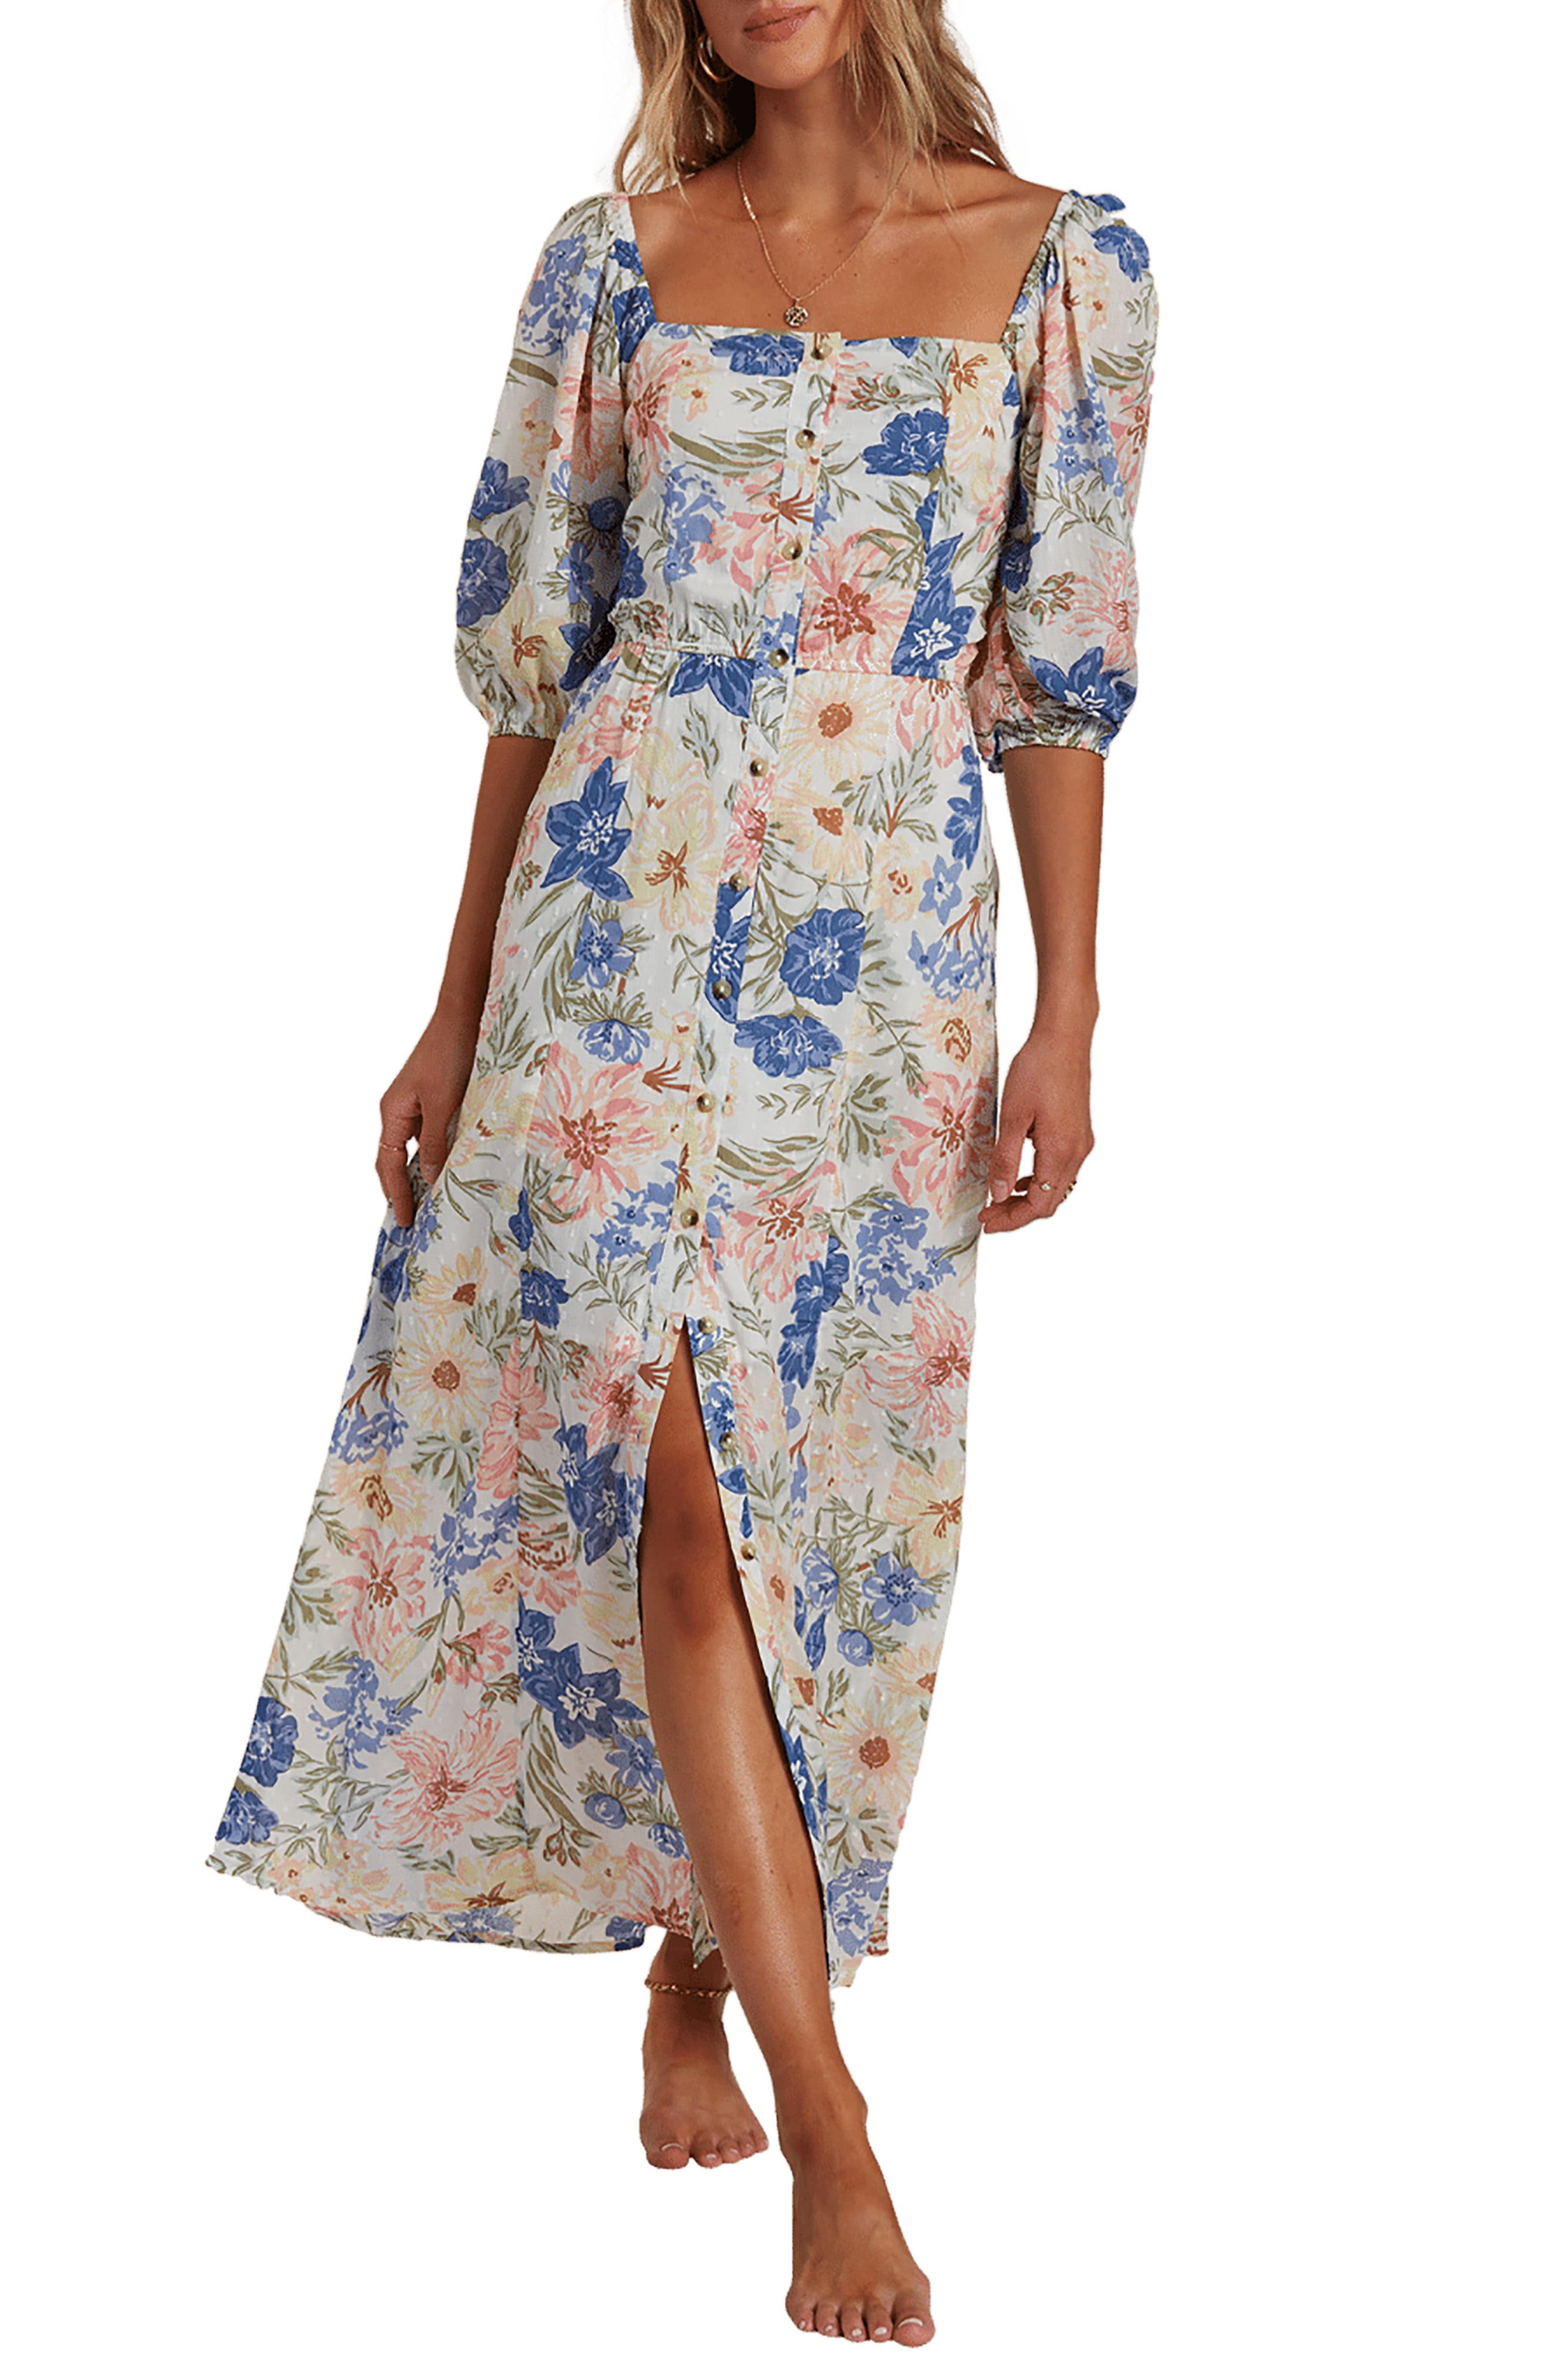 Buy > spring floral dresses > in stock